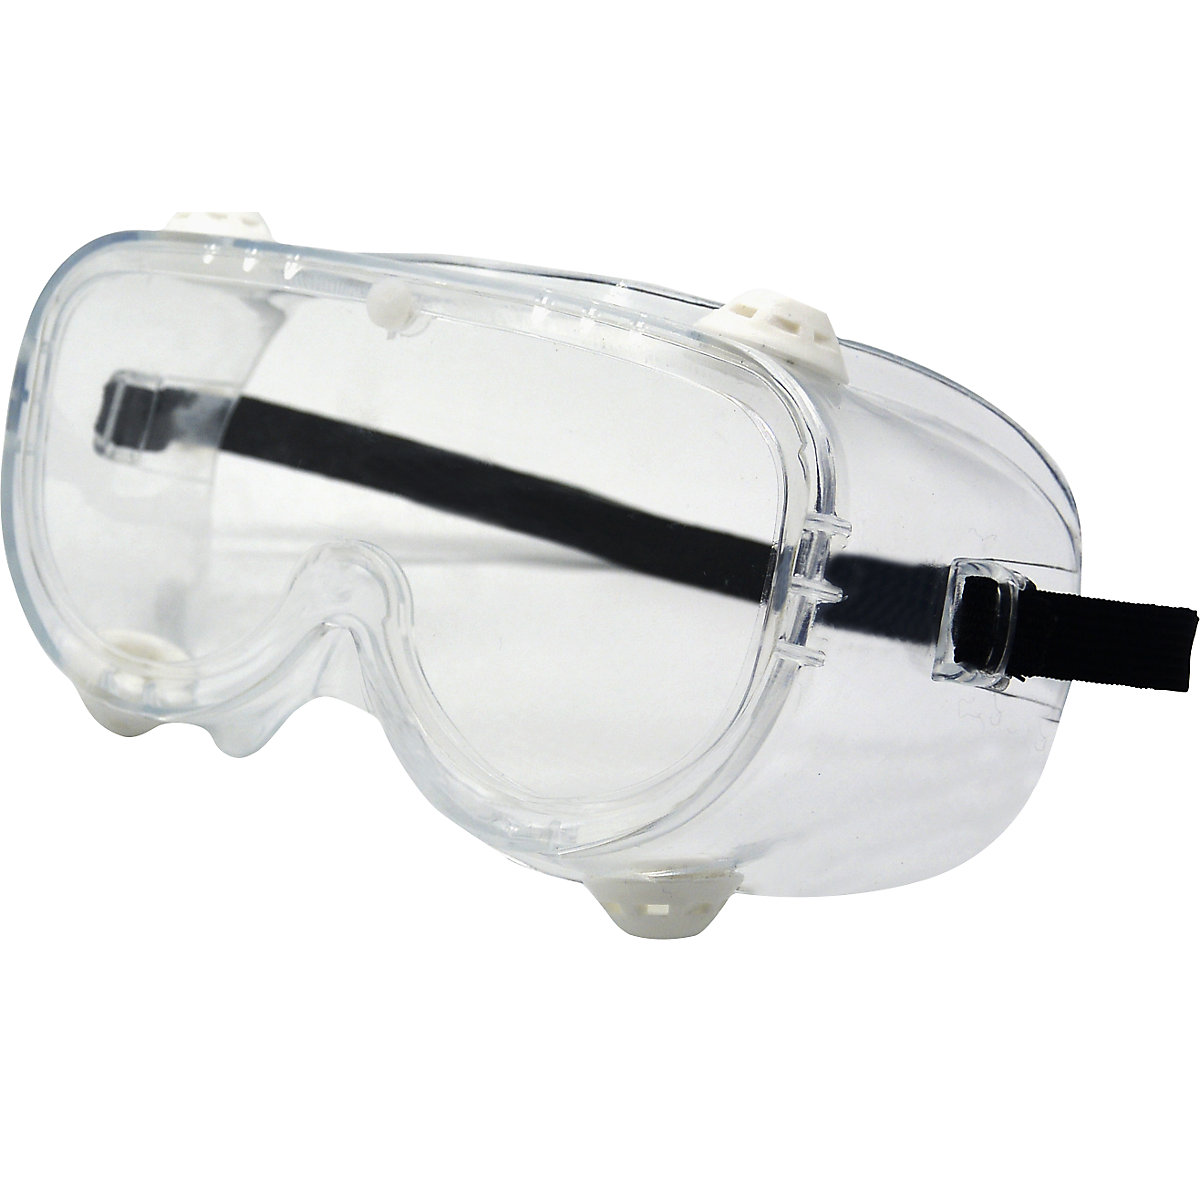 Occhiali di protezione EN 166 (conf. da 10 o da 200 pz.)